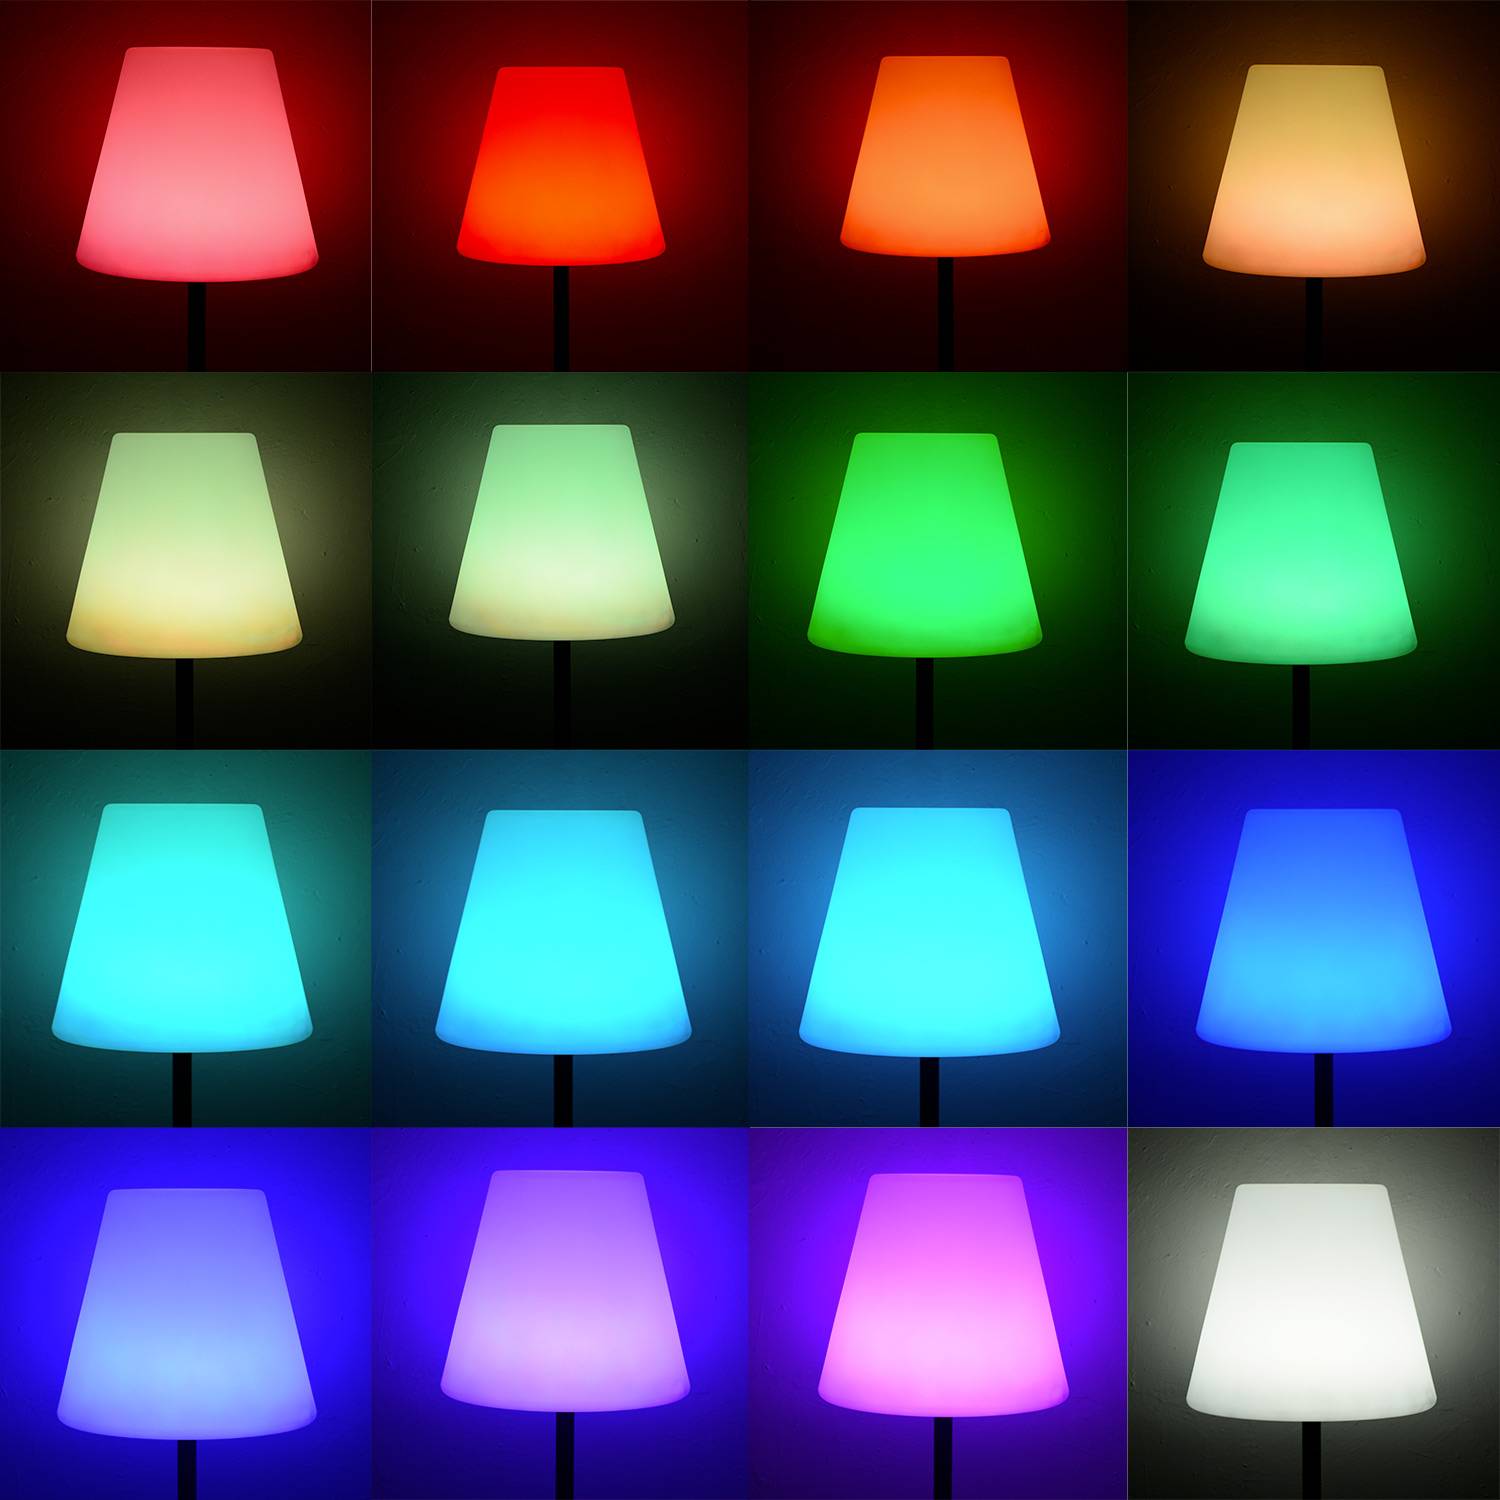 Staande lamp voor buiten 150 cm LAMPADA XL LED hybride, multicolor staande lamp, design op batterij, zonne-energie, afstandsbediening Photo5